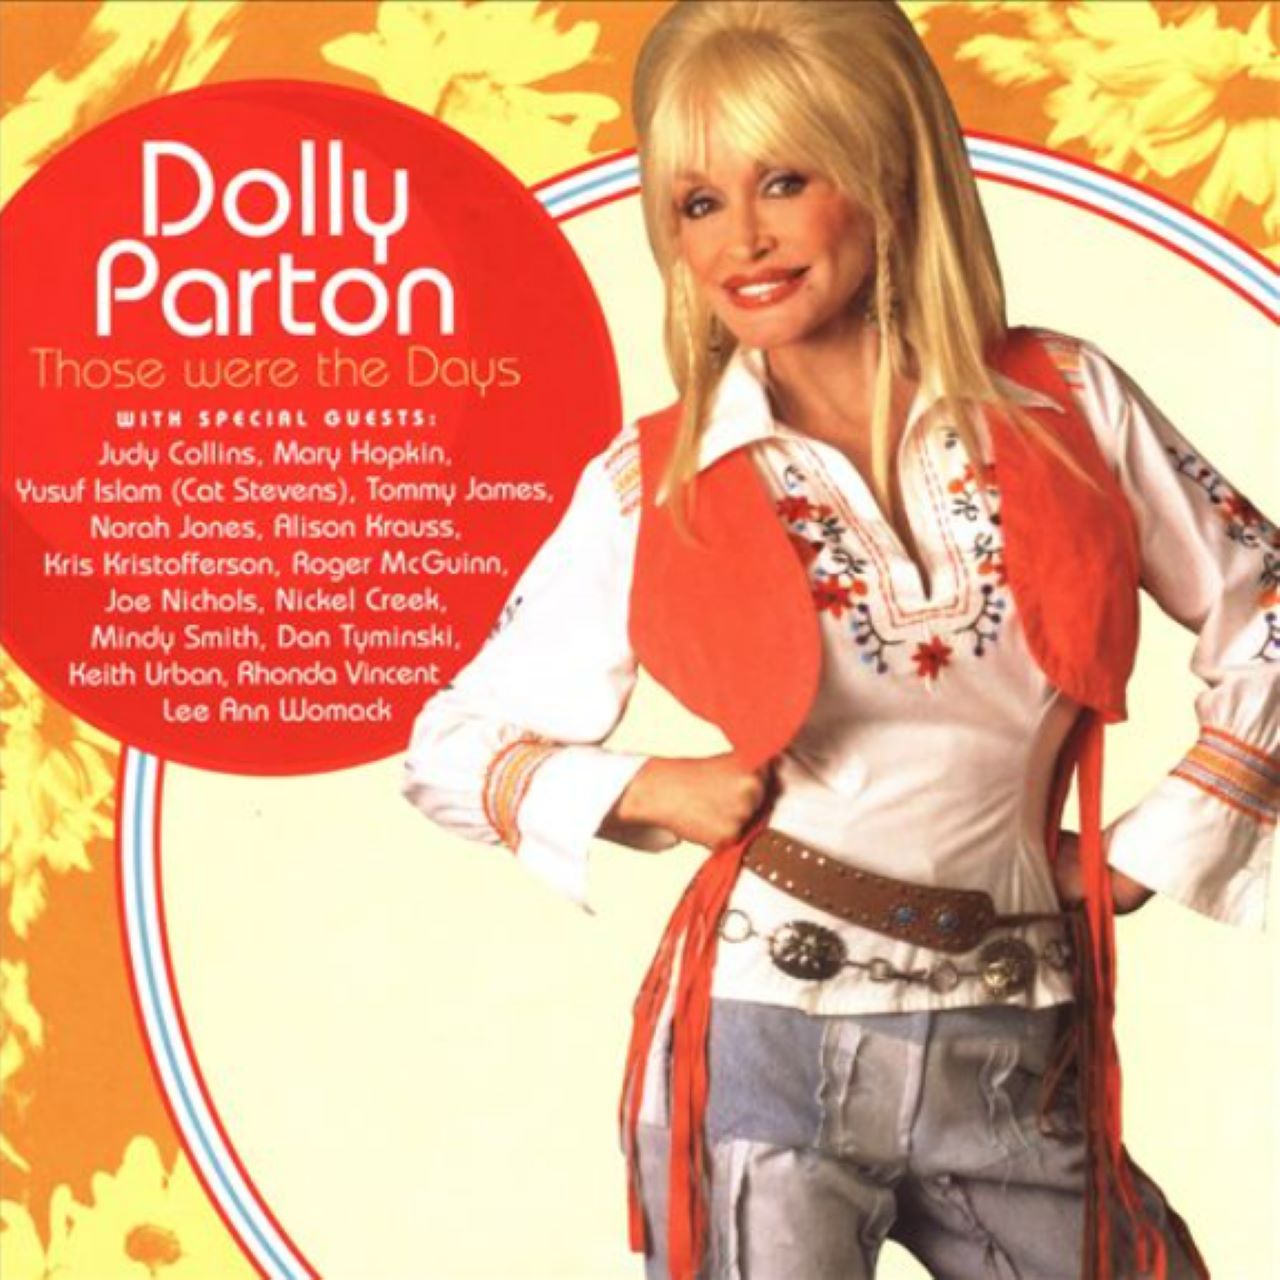 Dolly Parton - Those Where The Days cover album